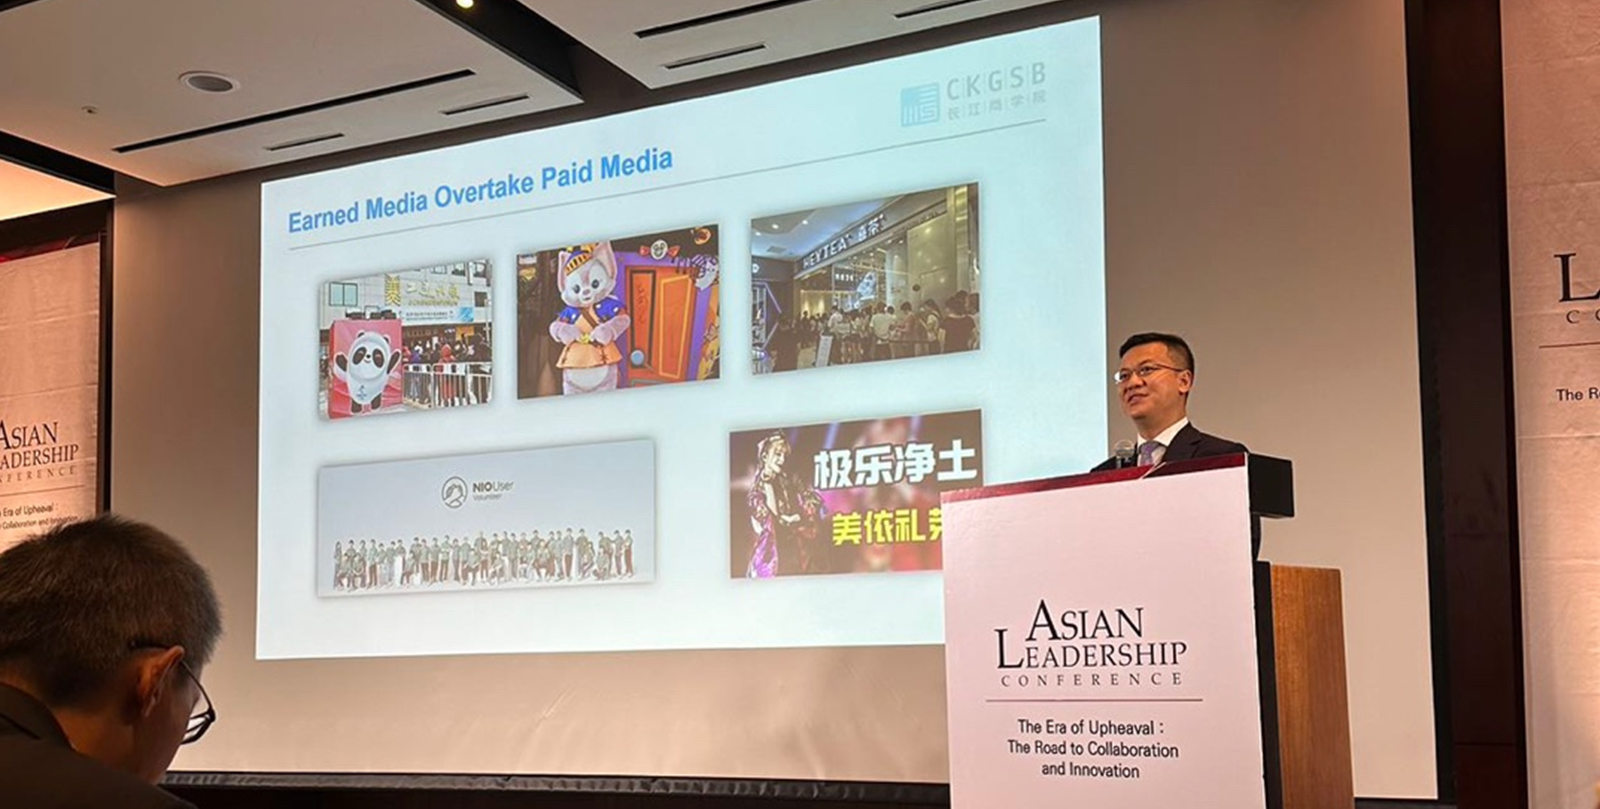 Asian Leadership Conference in Seoul - CKGSB’s Associate Professor of Marketing - Li Yang gave a presentaion